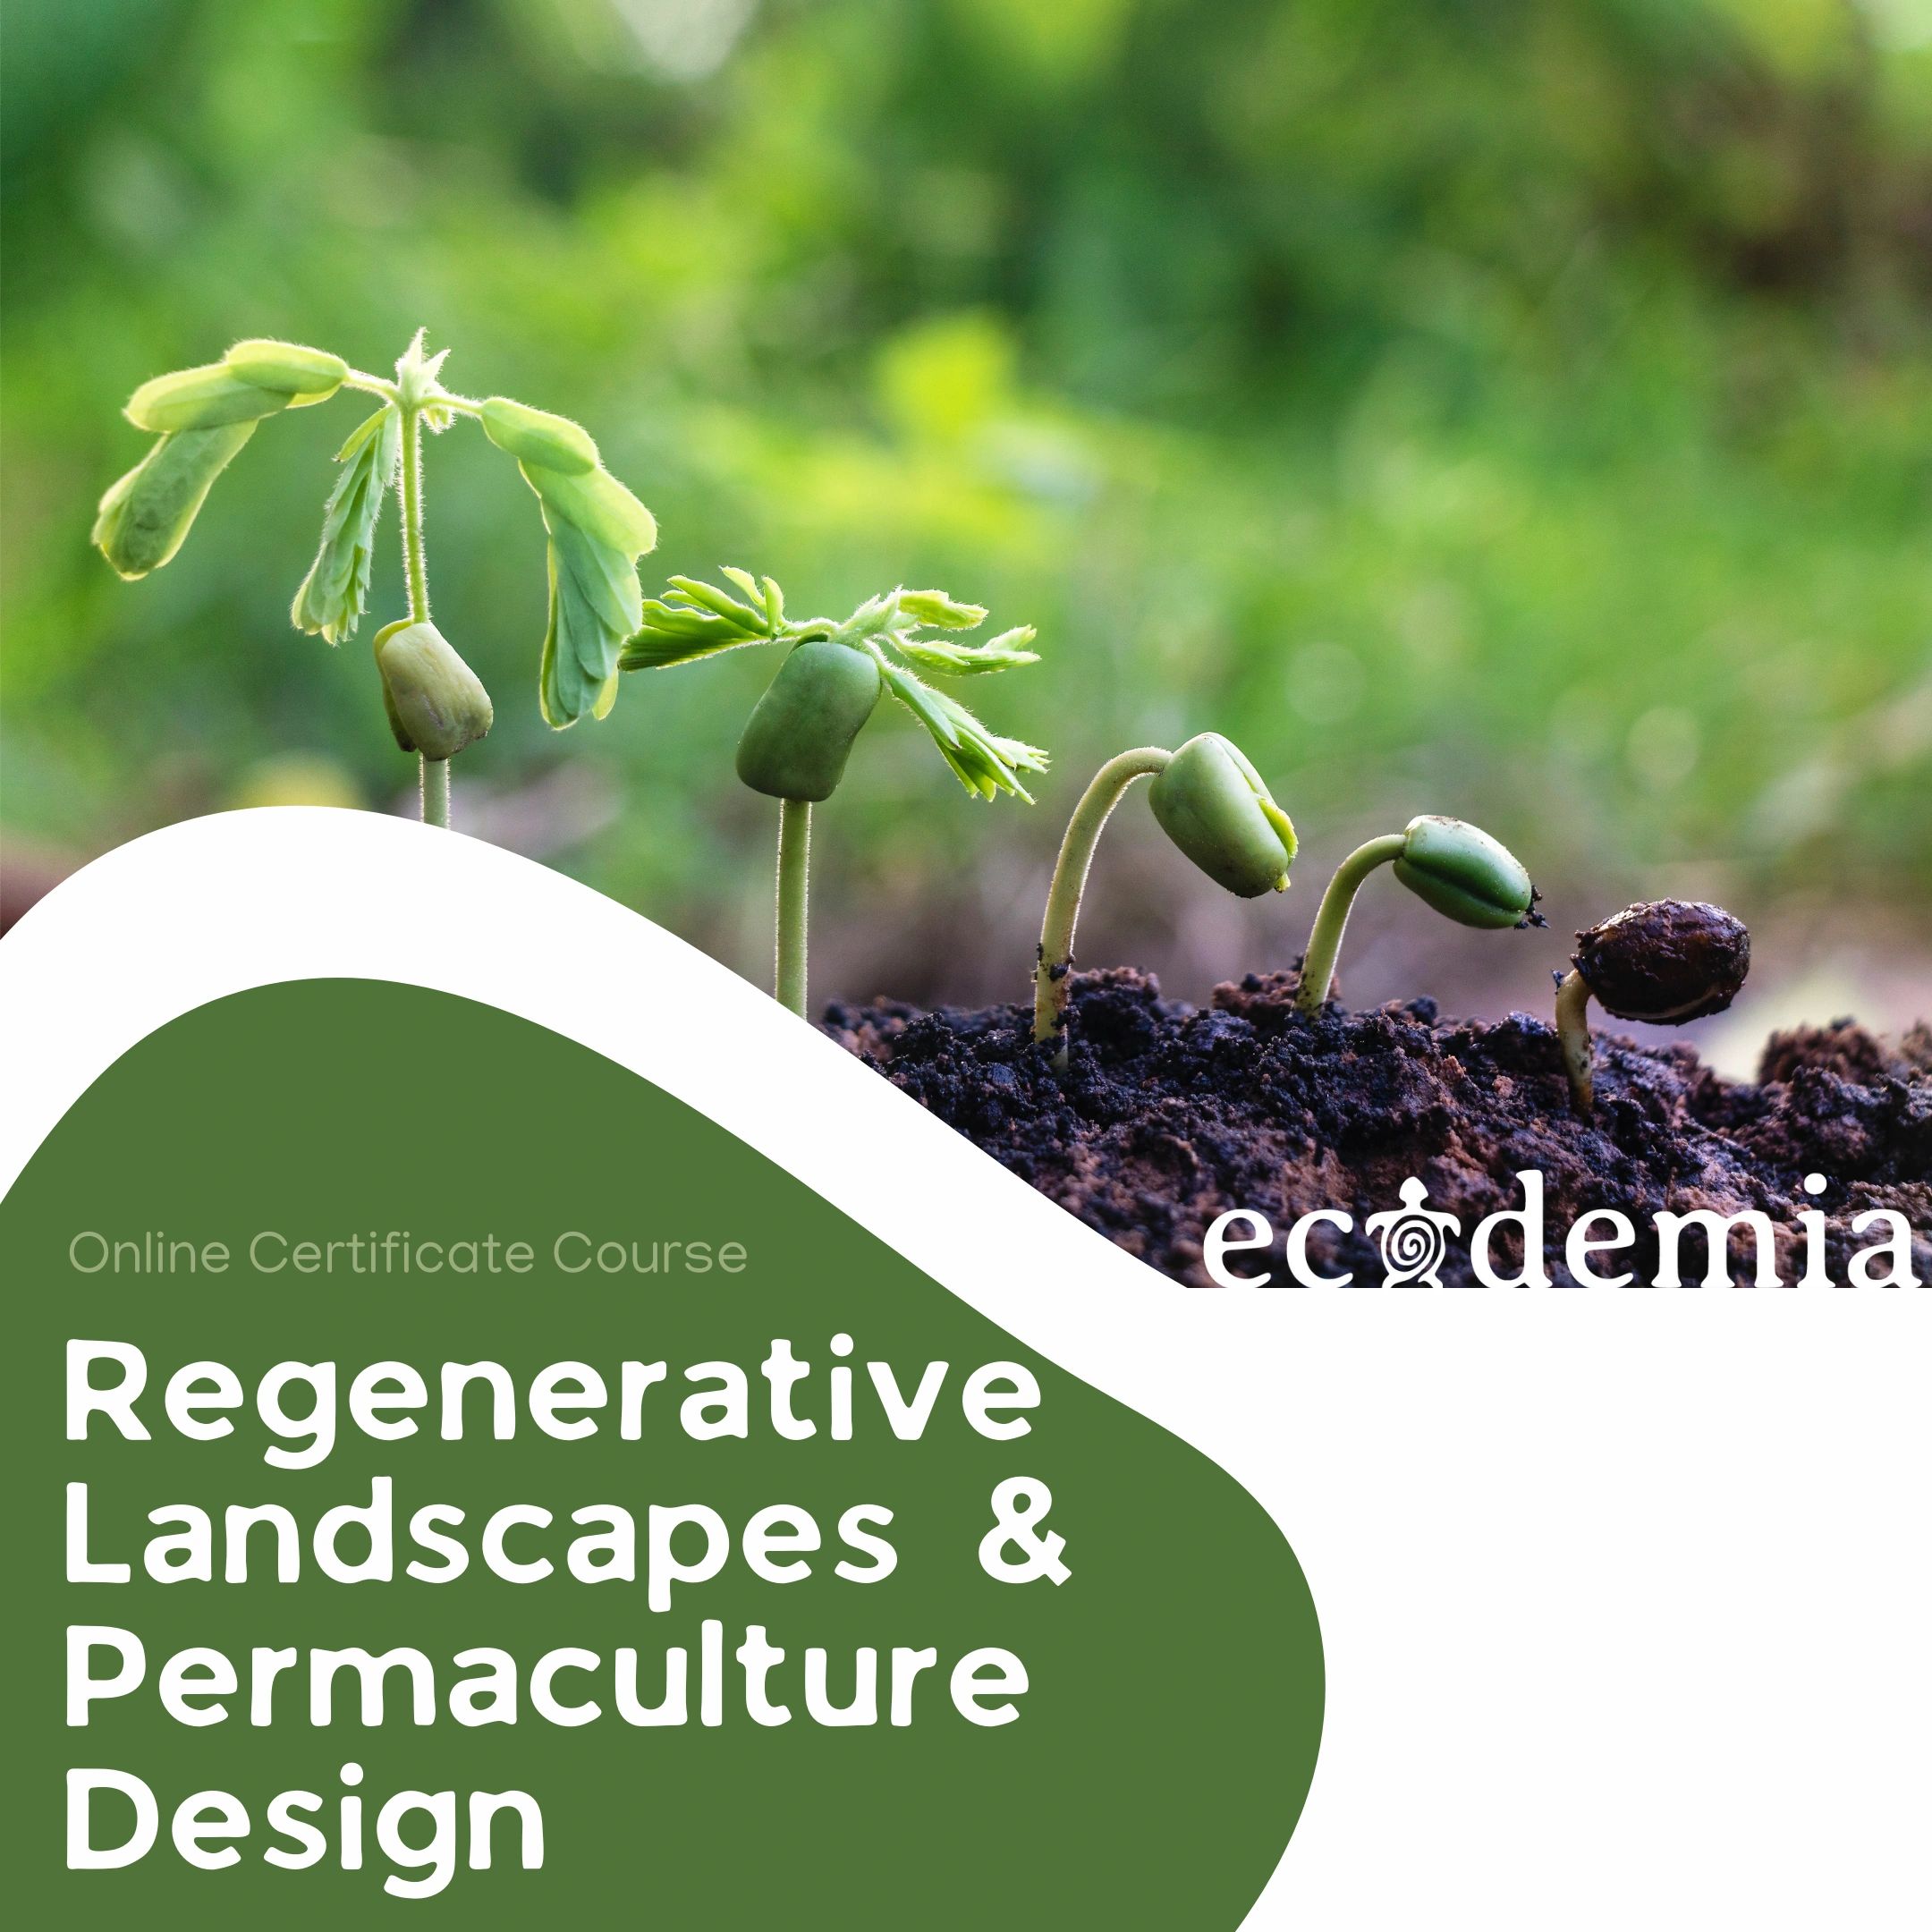 Regenerative Landscapes & Permaculture Design Certificate Course